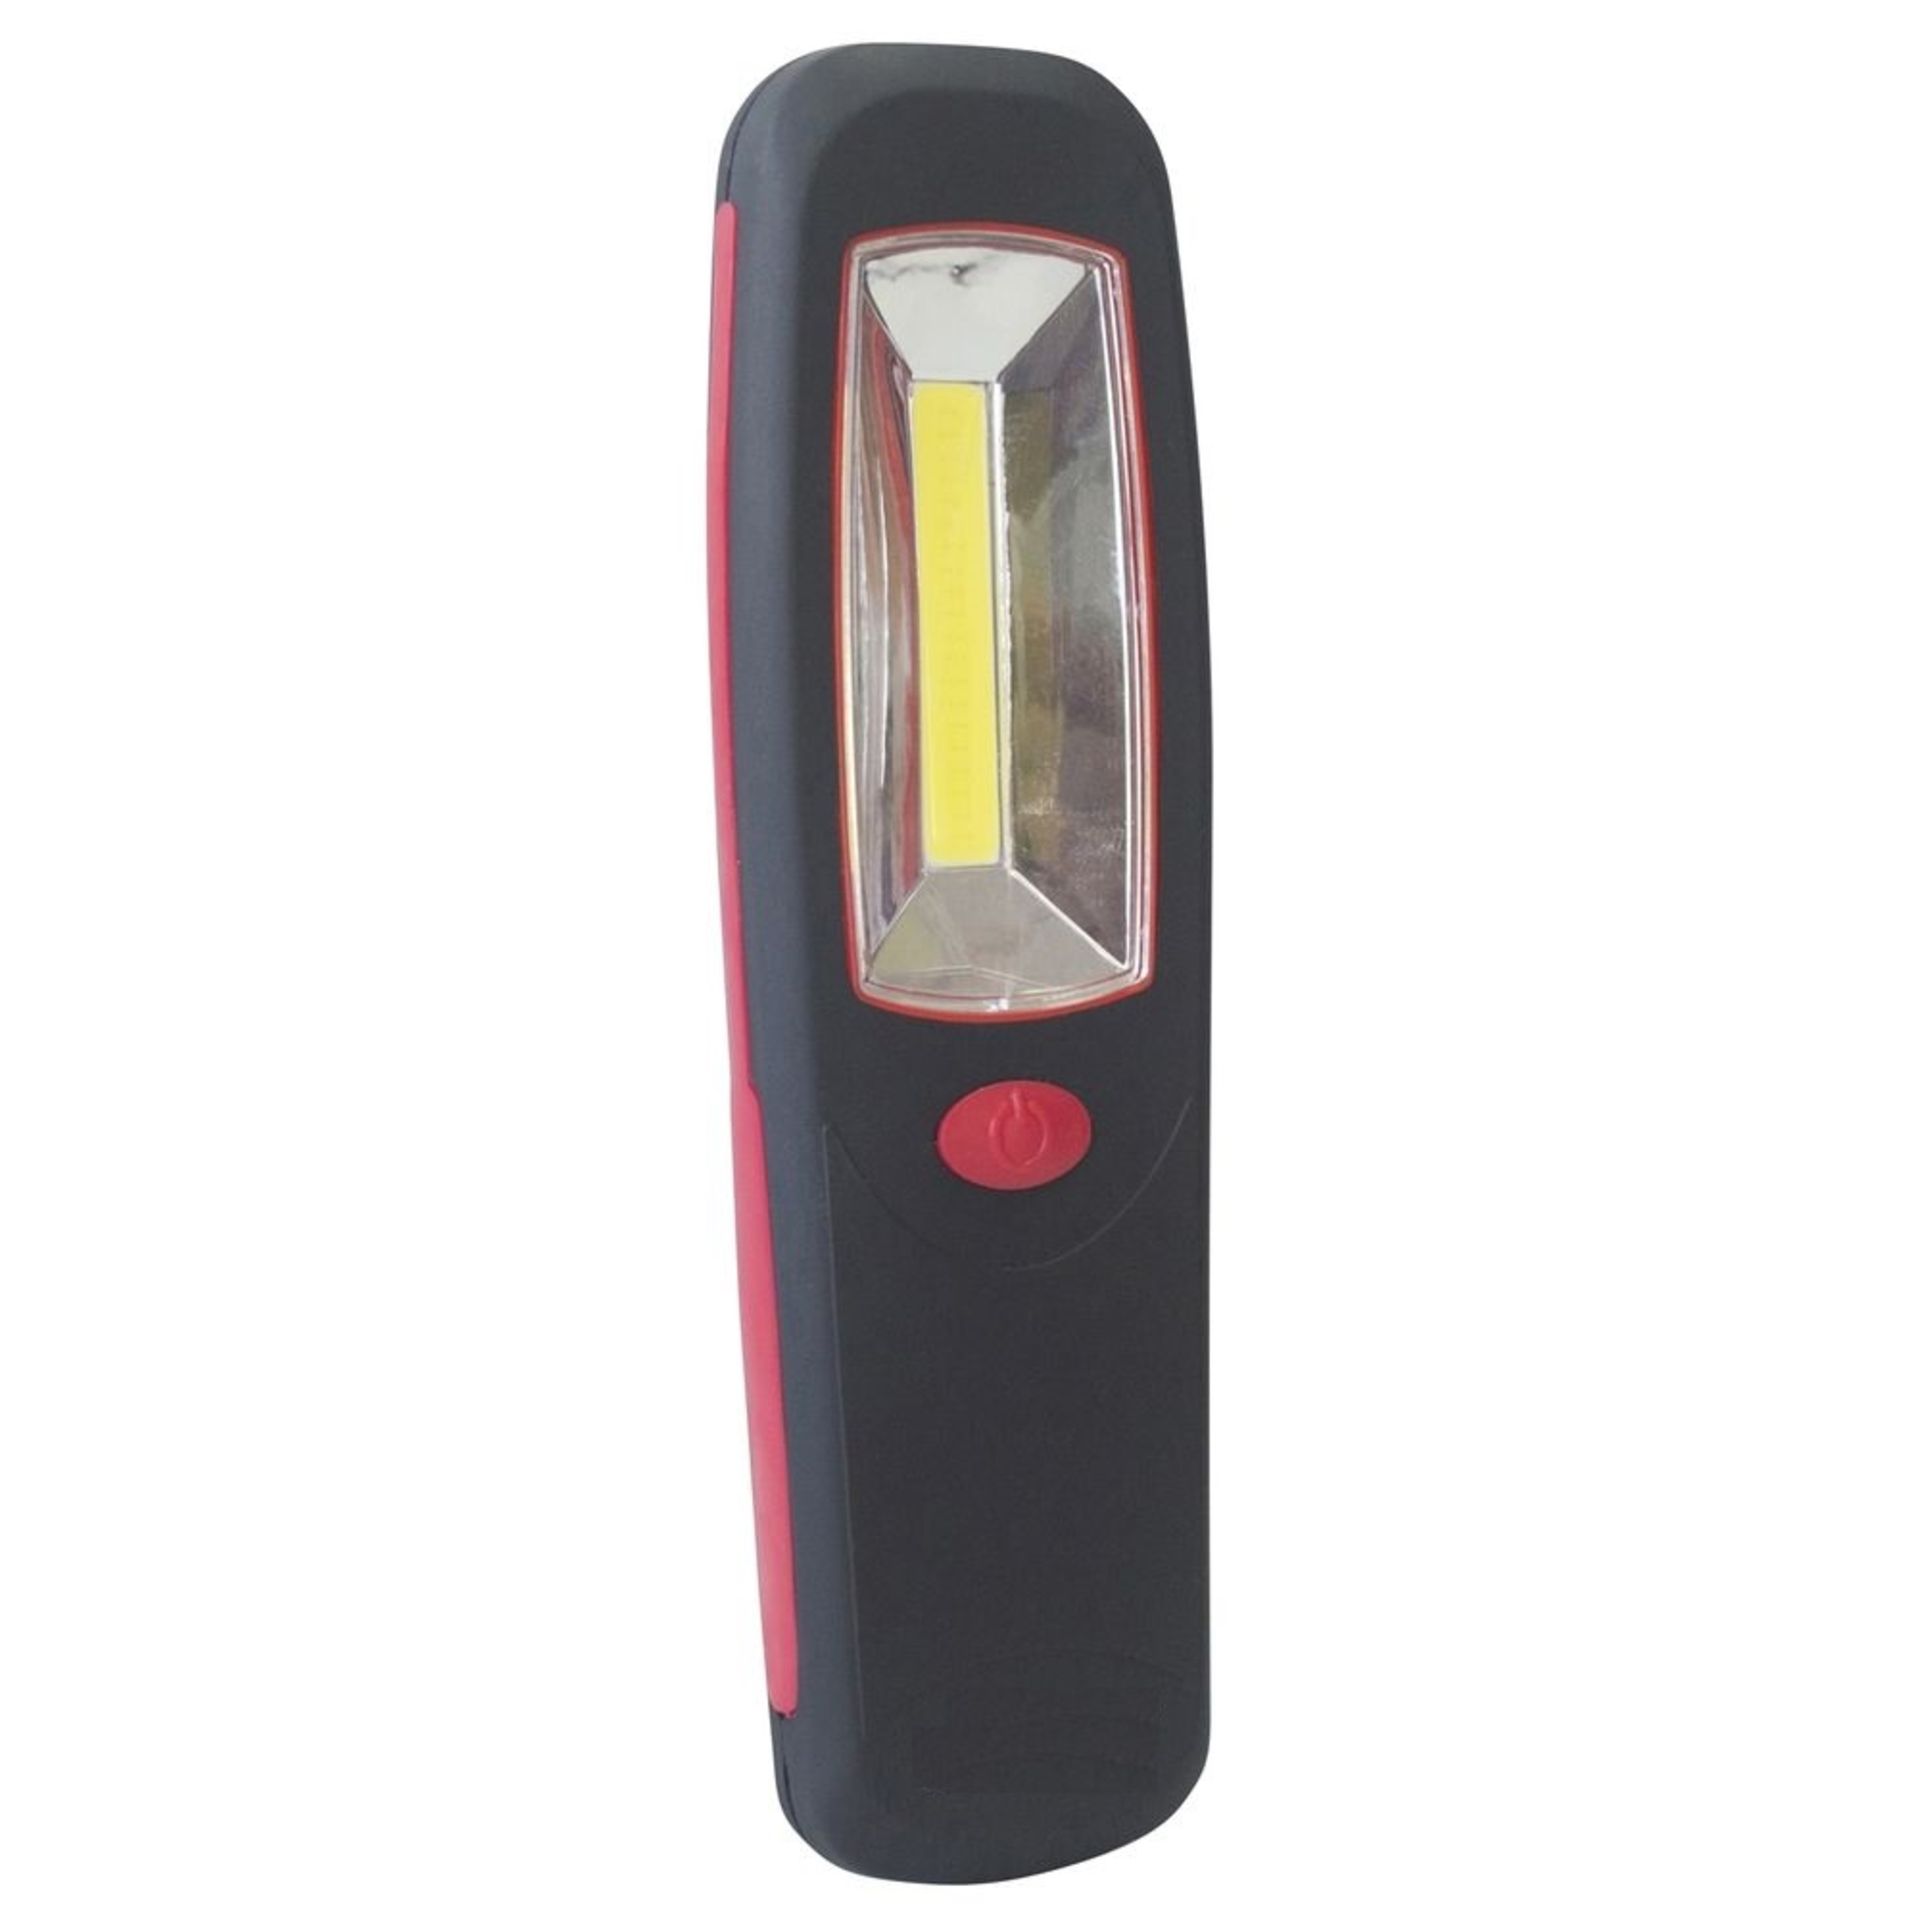 V *TRADE QTY* Brand New 5 Watt COB Worklight With Bright 250 Lumen Light - Hook & Magnet For Hands